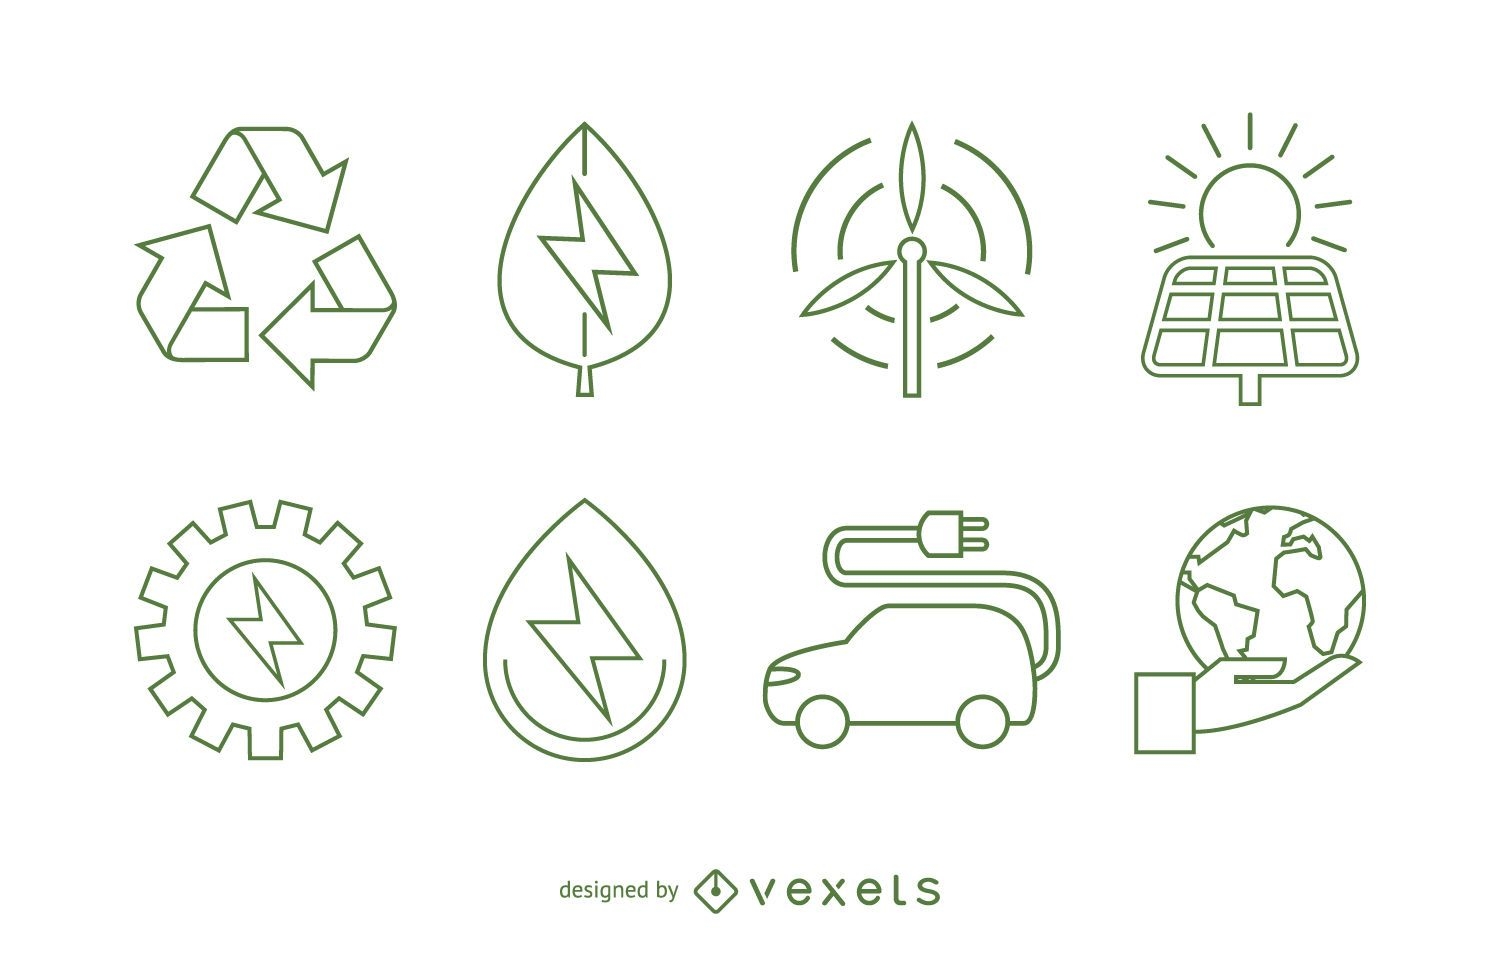 sustainable energy icon